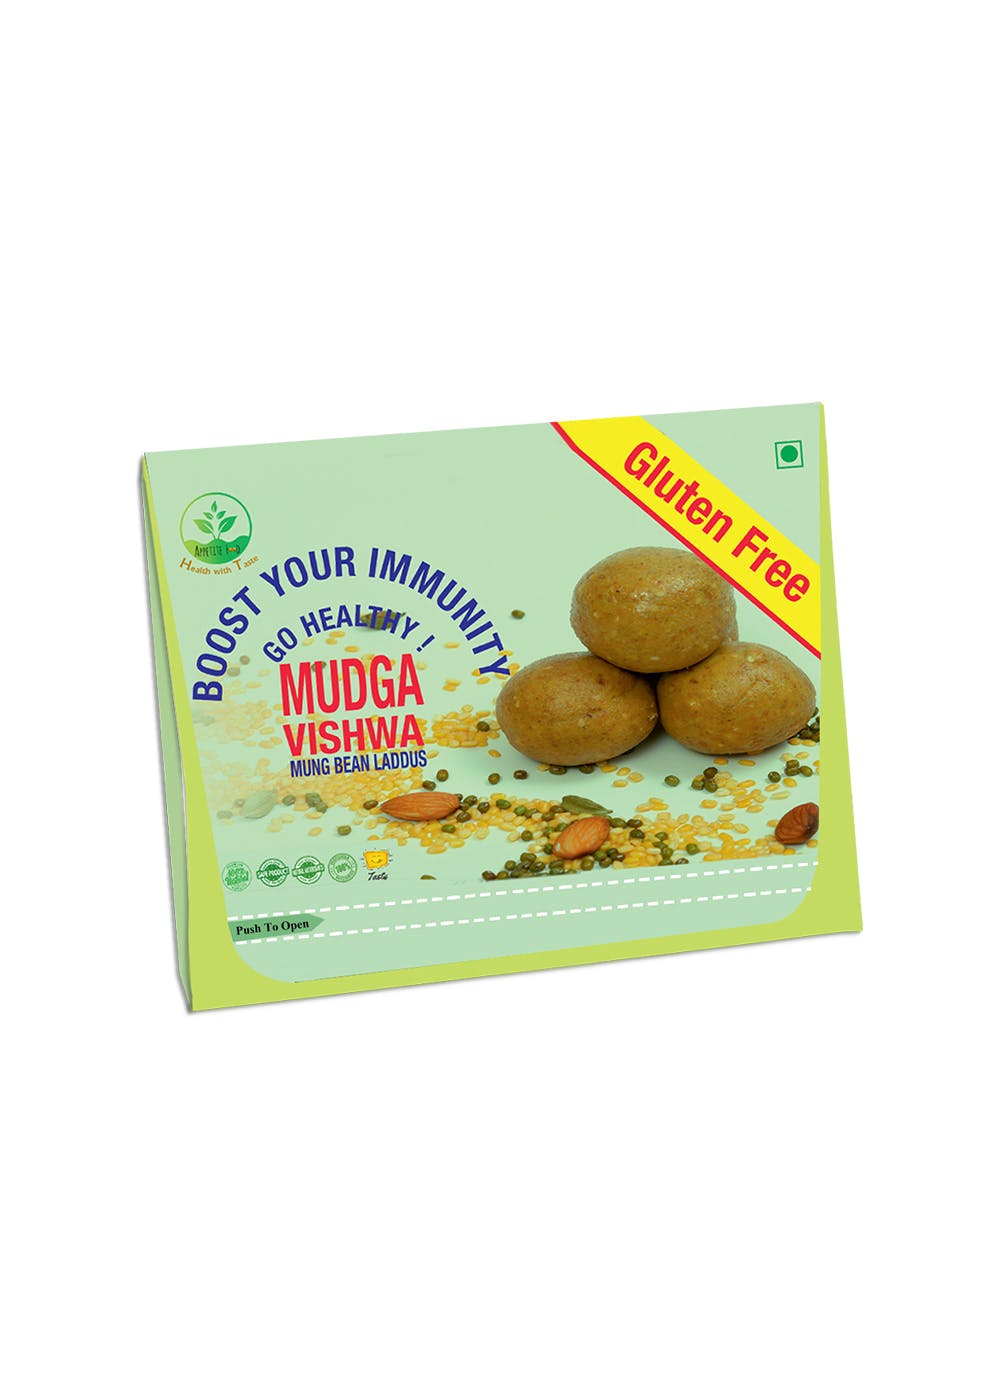 Mudga Vishwa Mung Beans Laddu